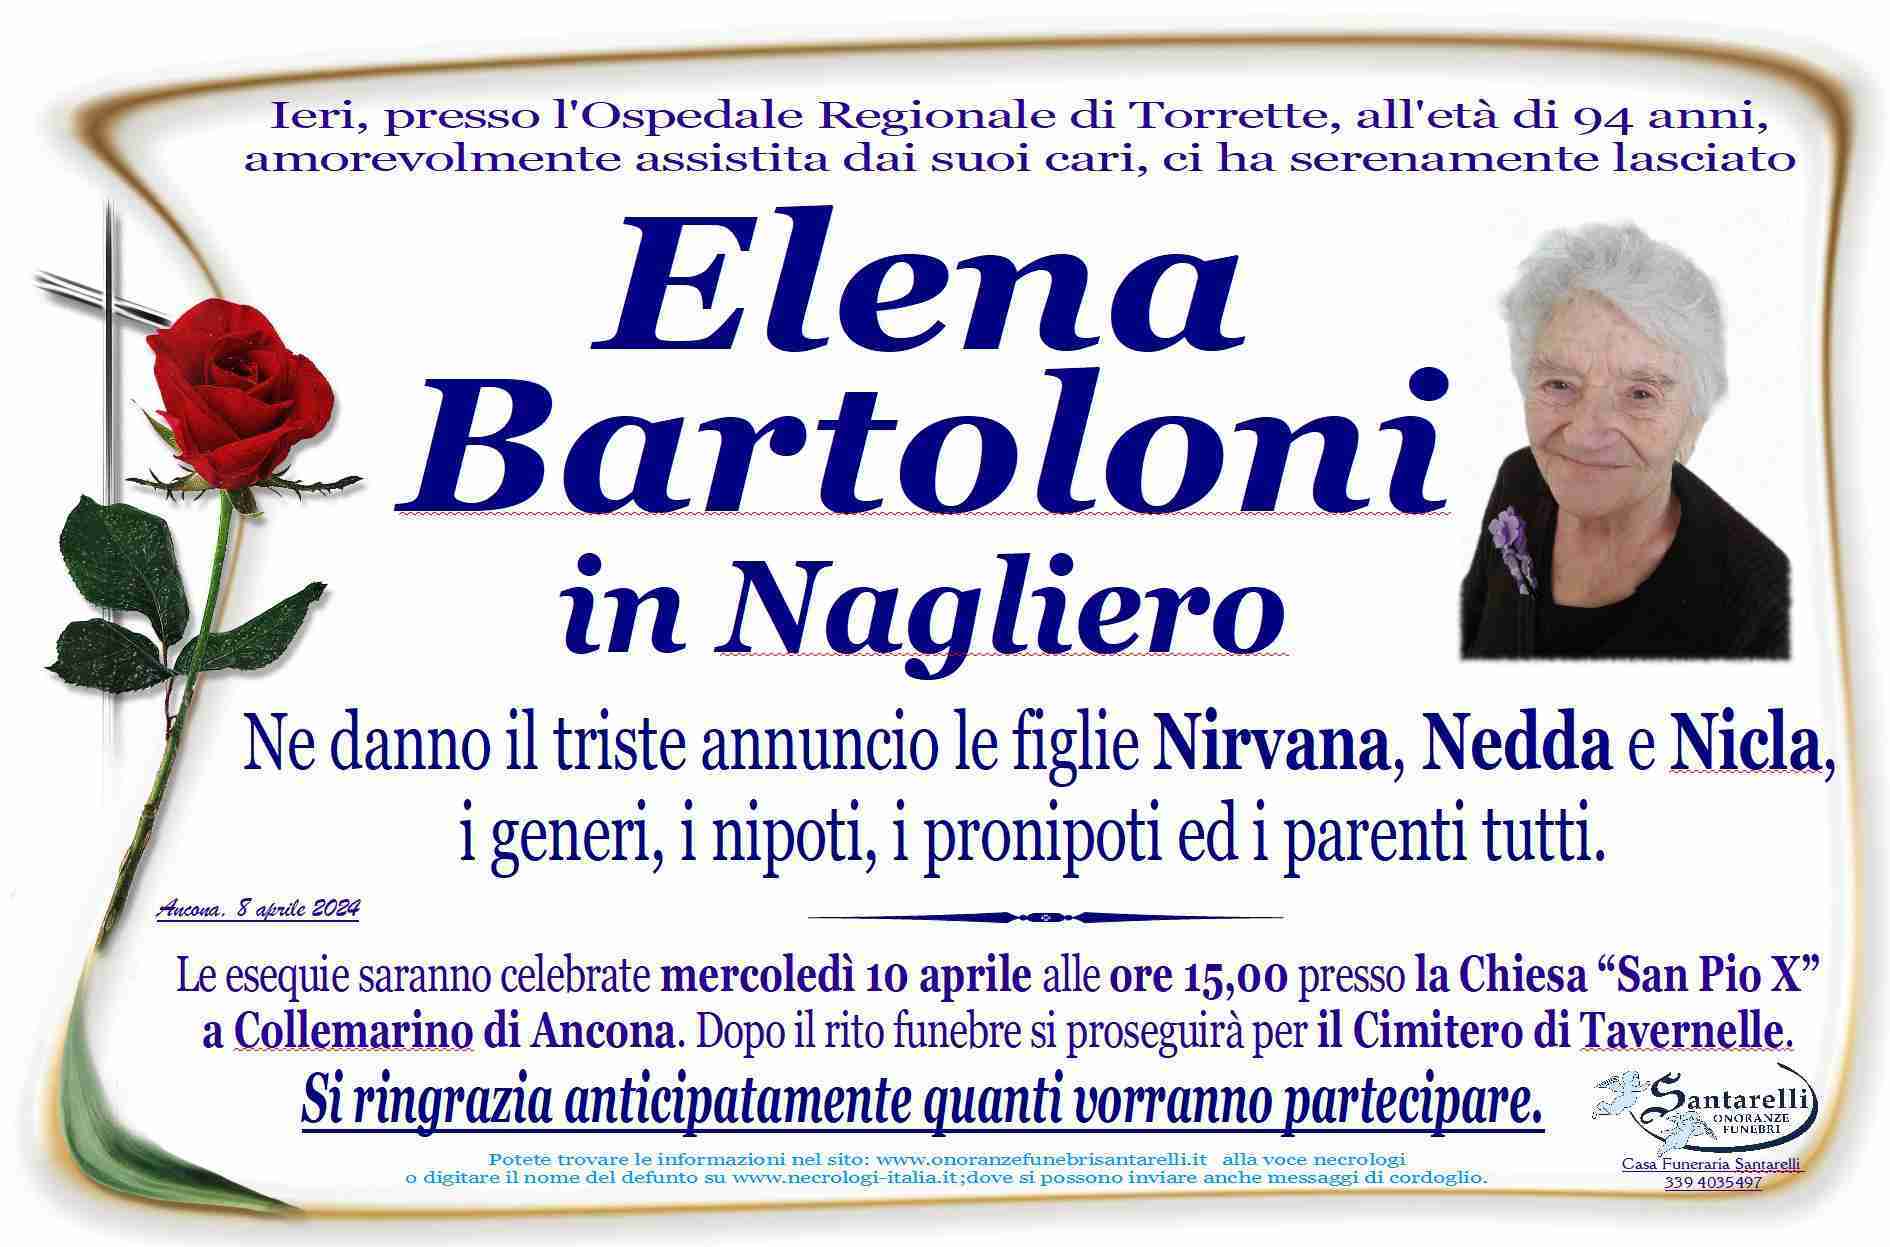 Elena Bartoloni